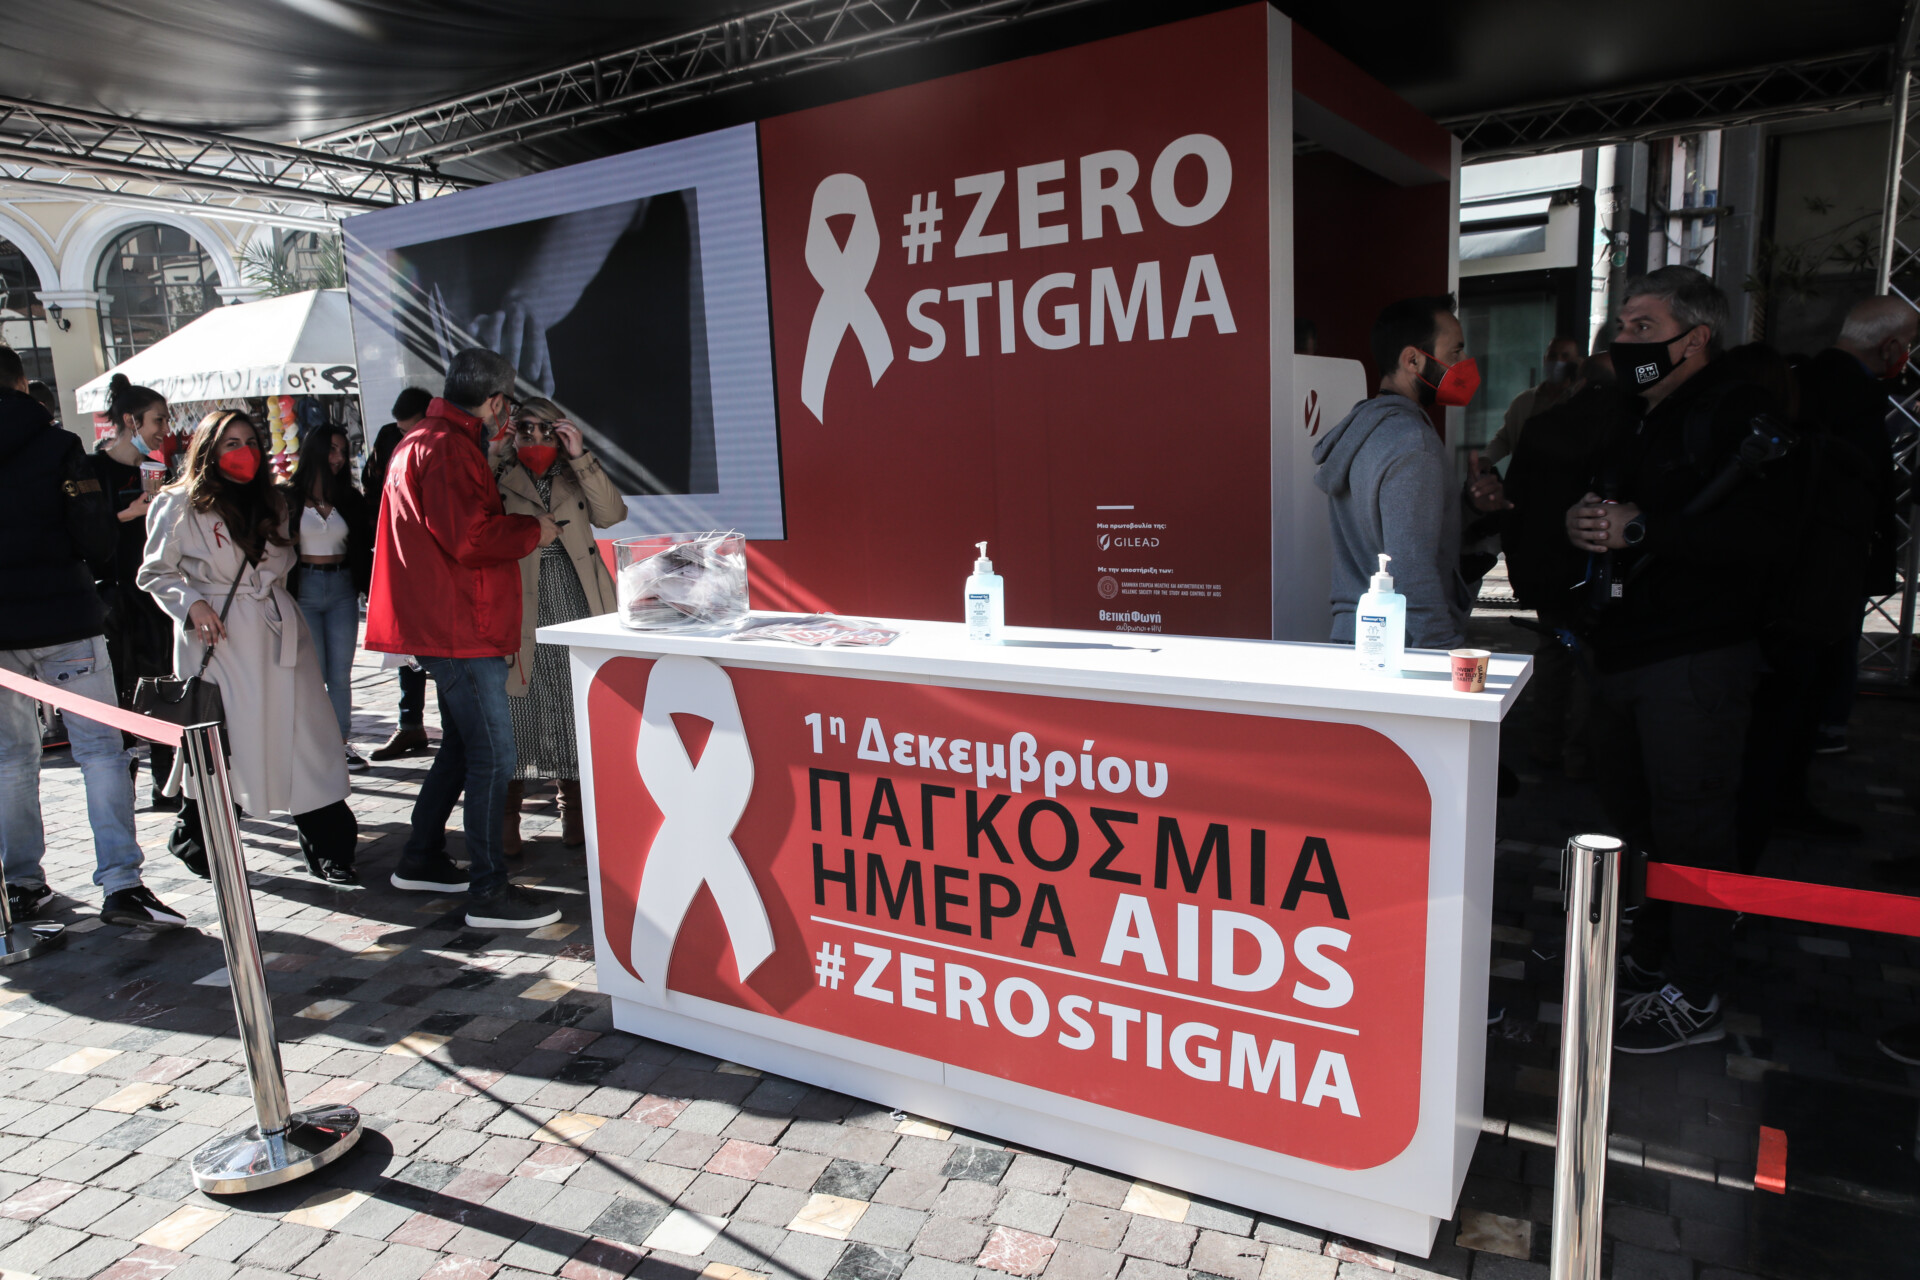 Eκστρατεία ευαισθητοποίησης στο Μοναστηράκι με κεντρικό μήνυμα #ZeroStigma, με την υποστήριξη της Ελληνικής Εταιρίας Μελέτης και Αντιμετώπισης του AIDS ©EUROKINISSI